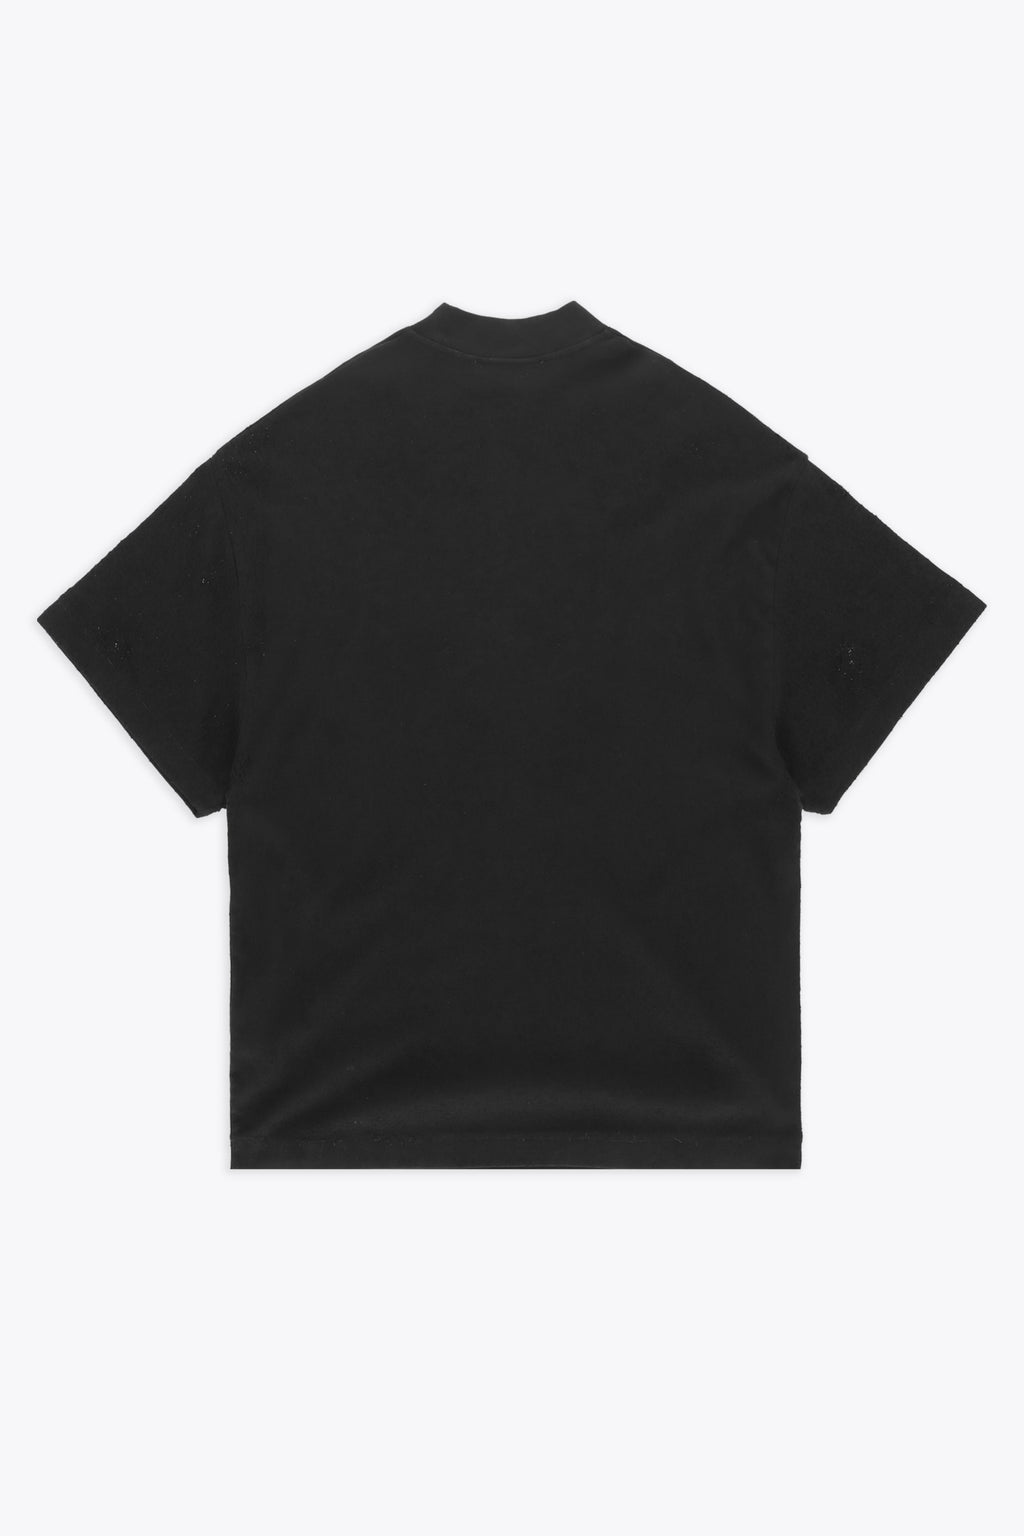 alt-image__Distressed-black-cotton-t-shirt---Distressed-oversized-t-shirt-